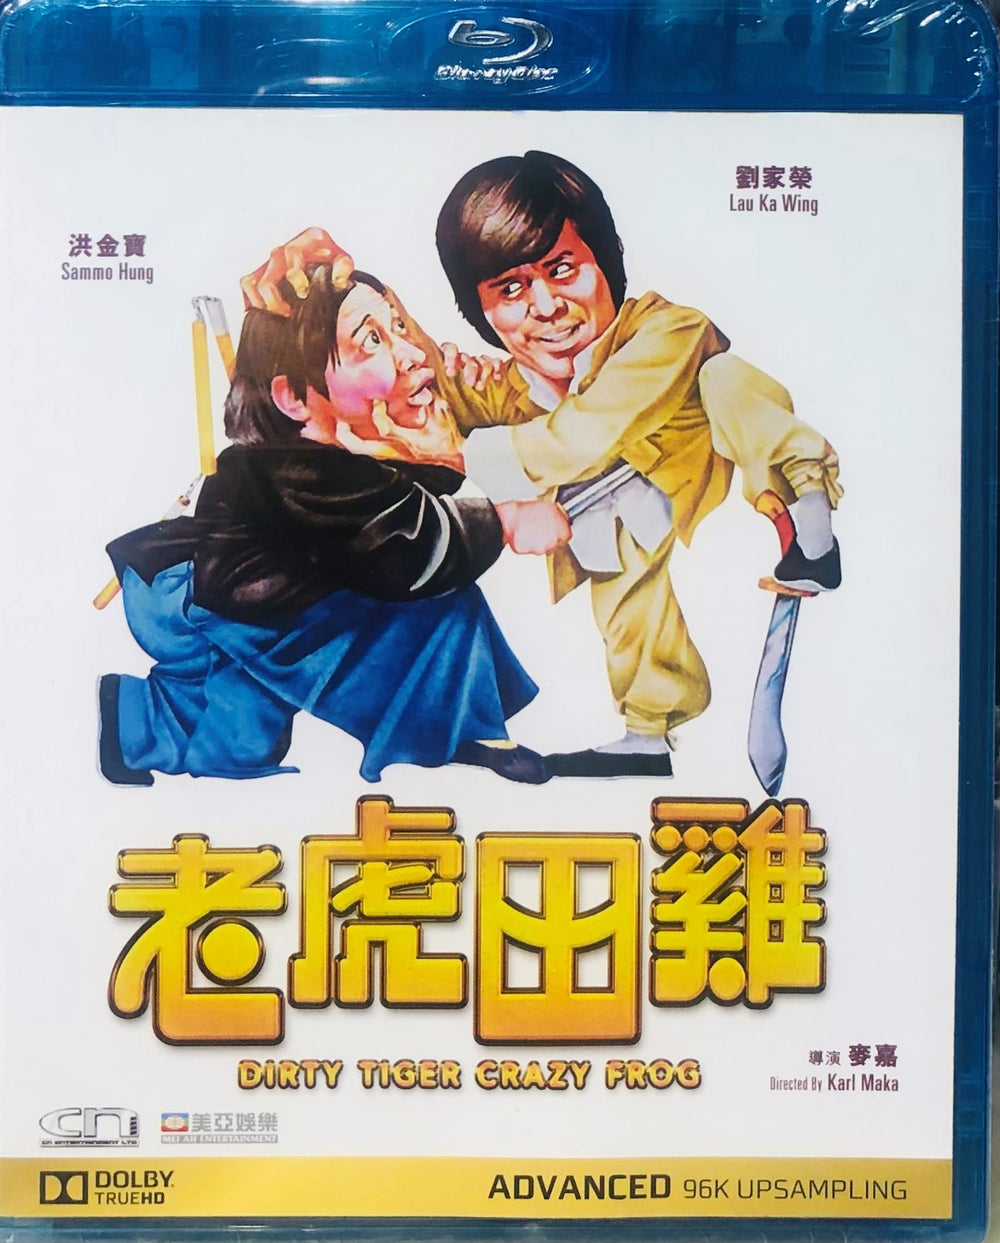 Dirty Tiger Crazy Frog 老虎田雞 1978 (Hong Kong Movie) BLU-RAY with English Subtitles (Region Free)